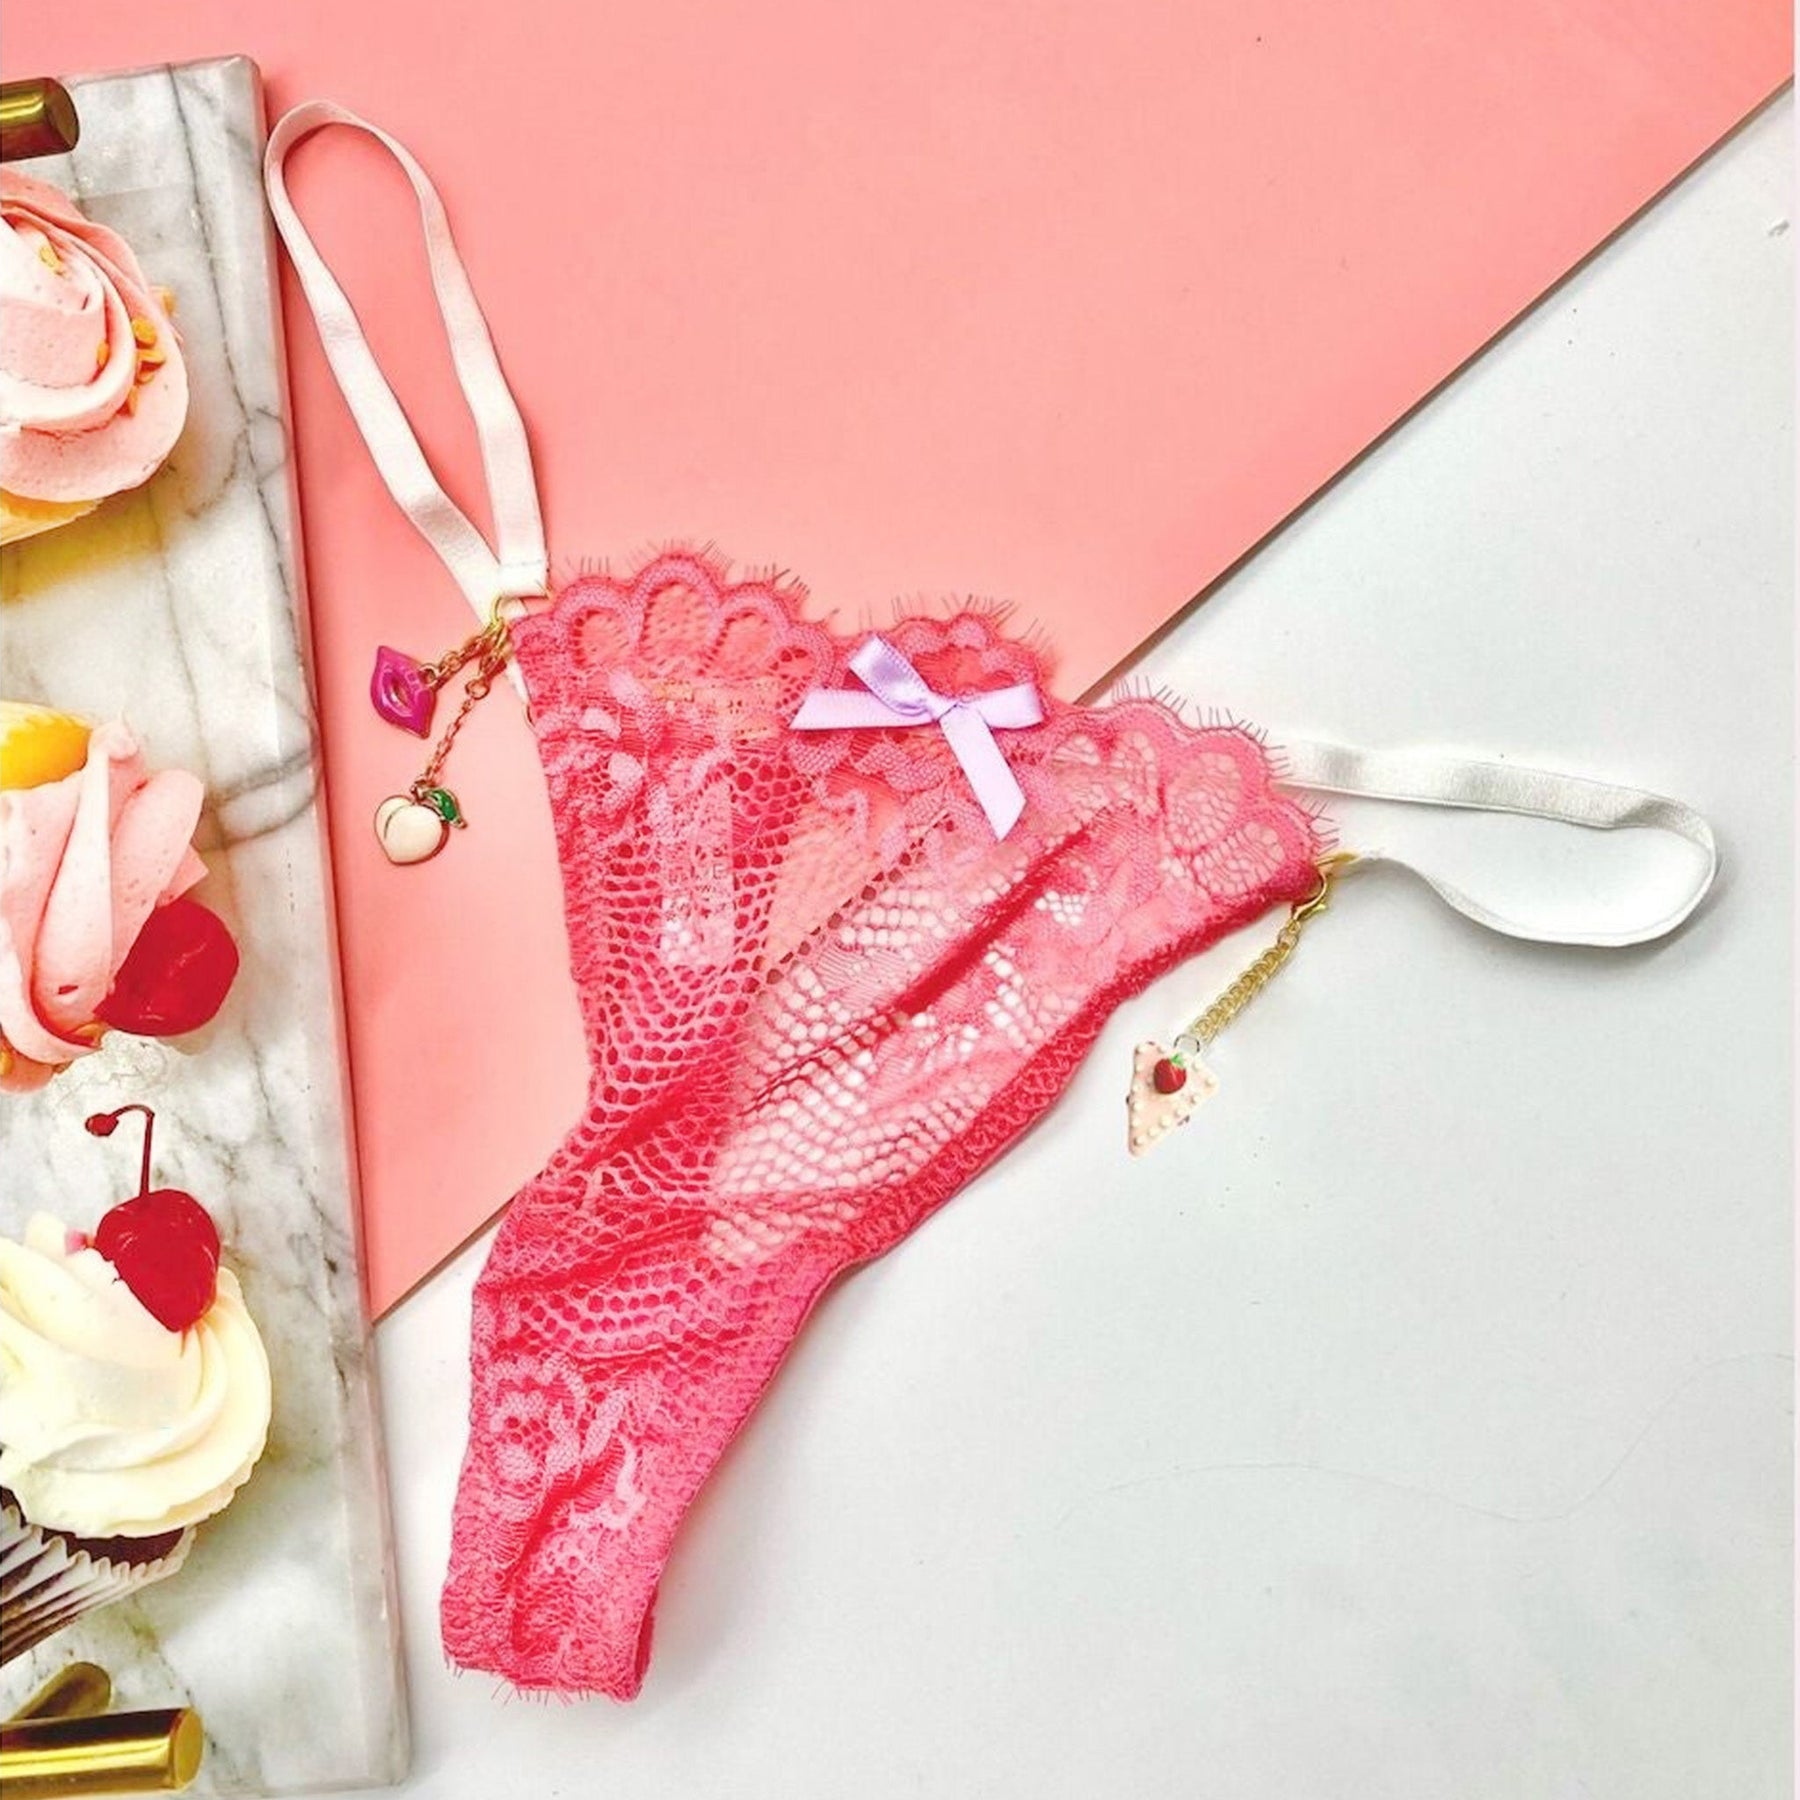 Victoria's Secret Sexy Little Things Thong Panty Cherry 100% Nylon